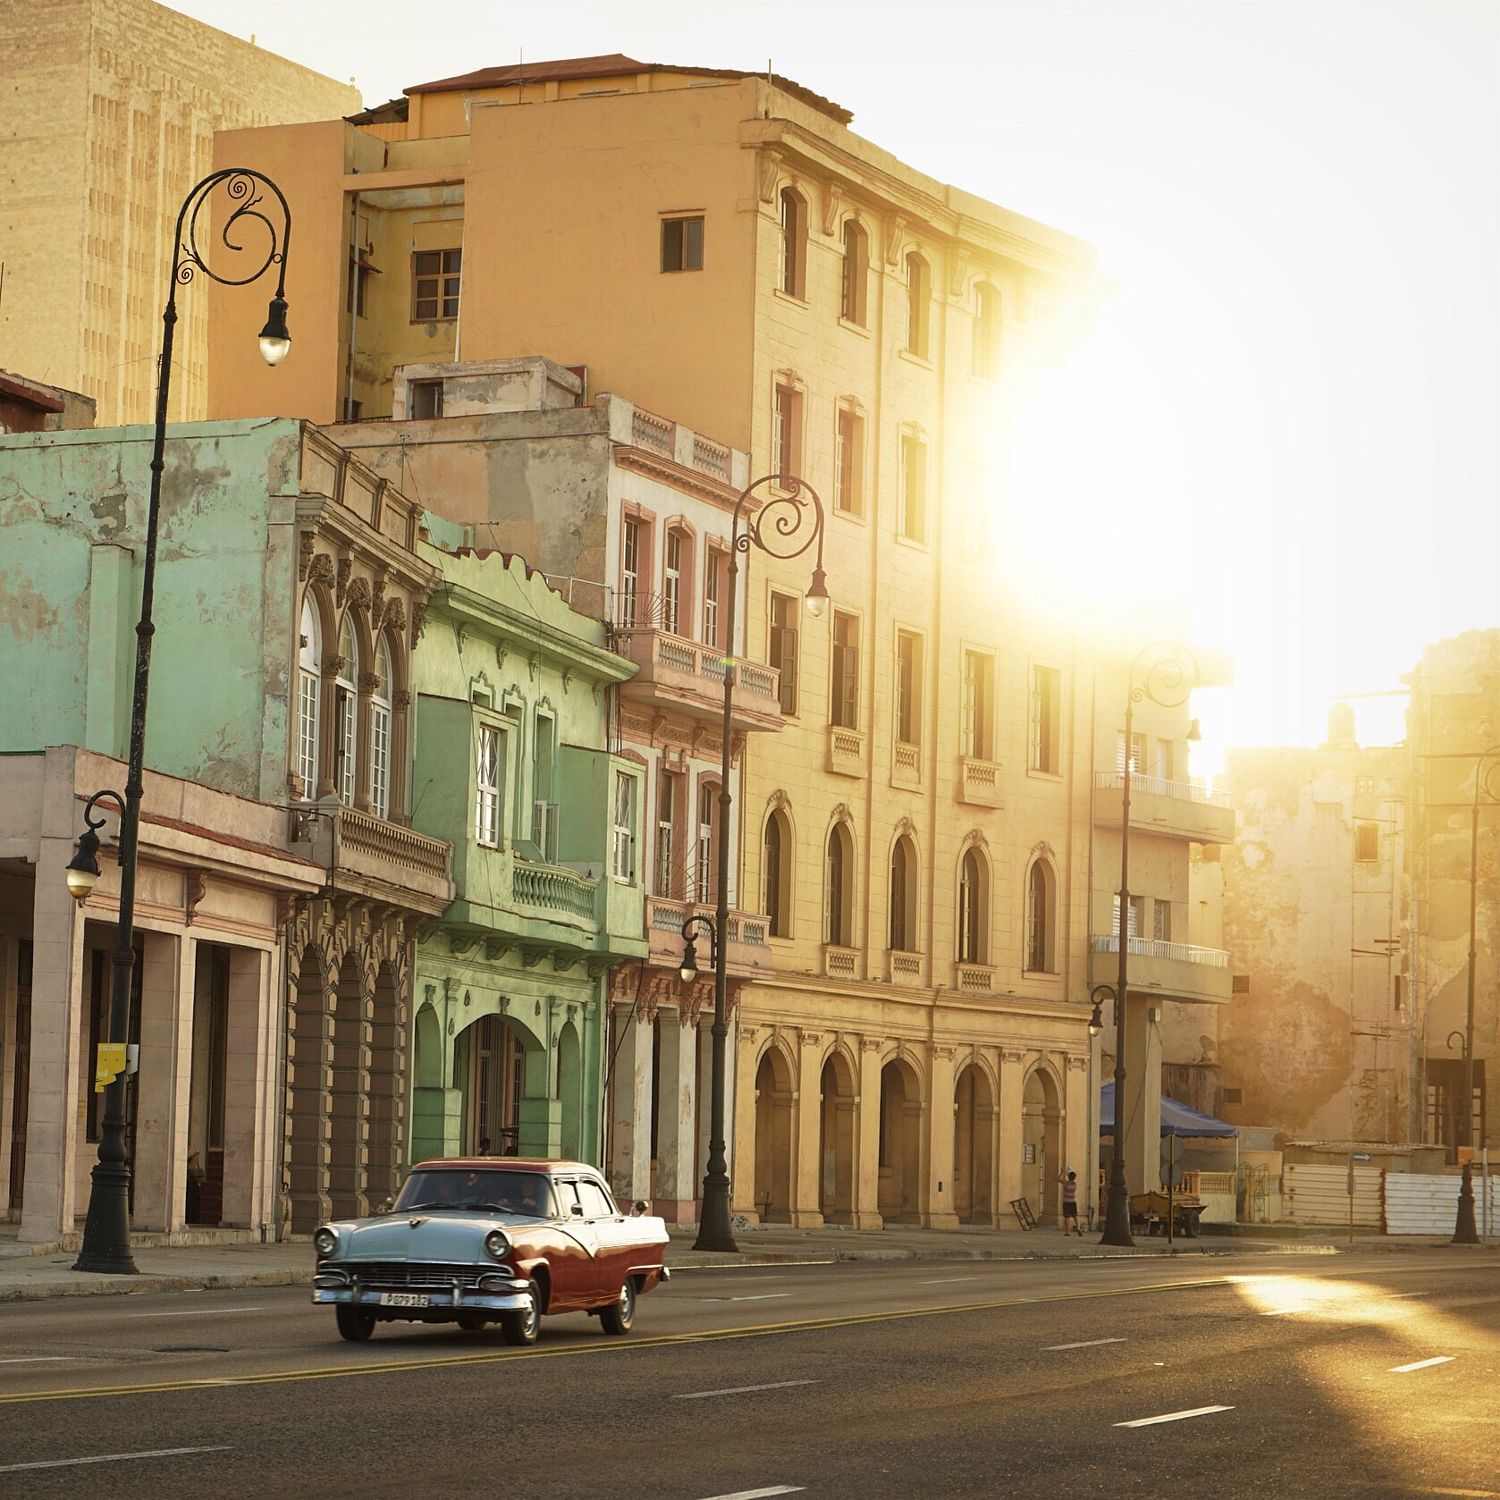 Havana, Cuba. November 2015.